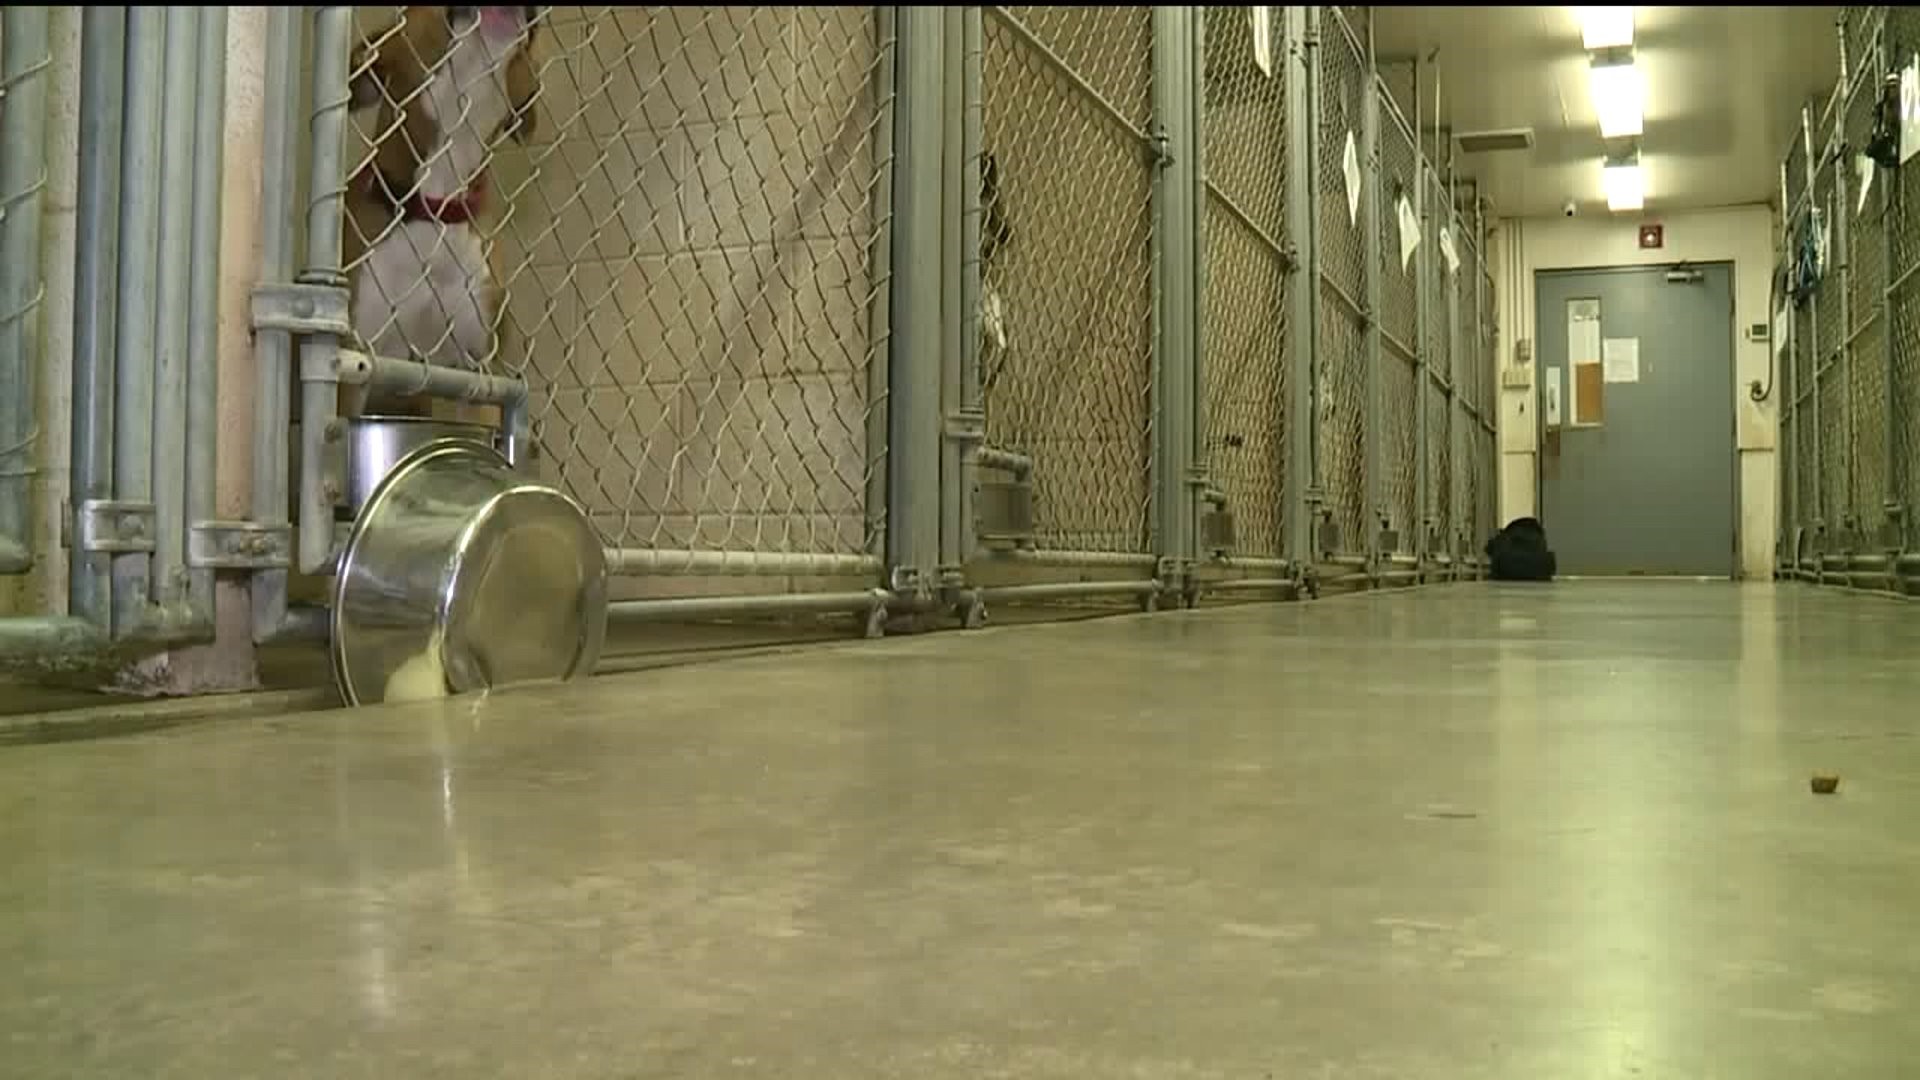 Too Many Dogs at Clinton County SPCA